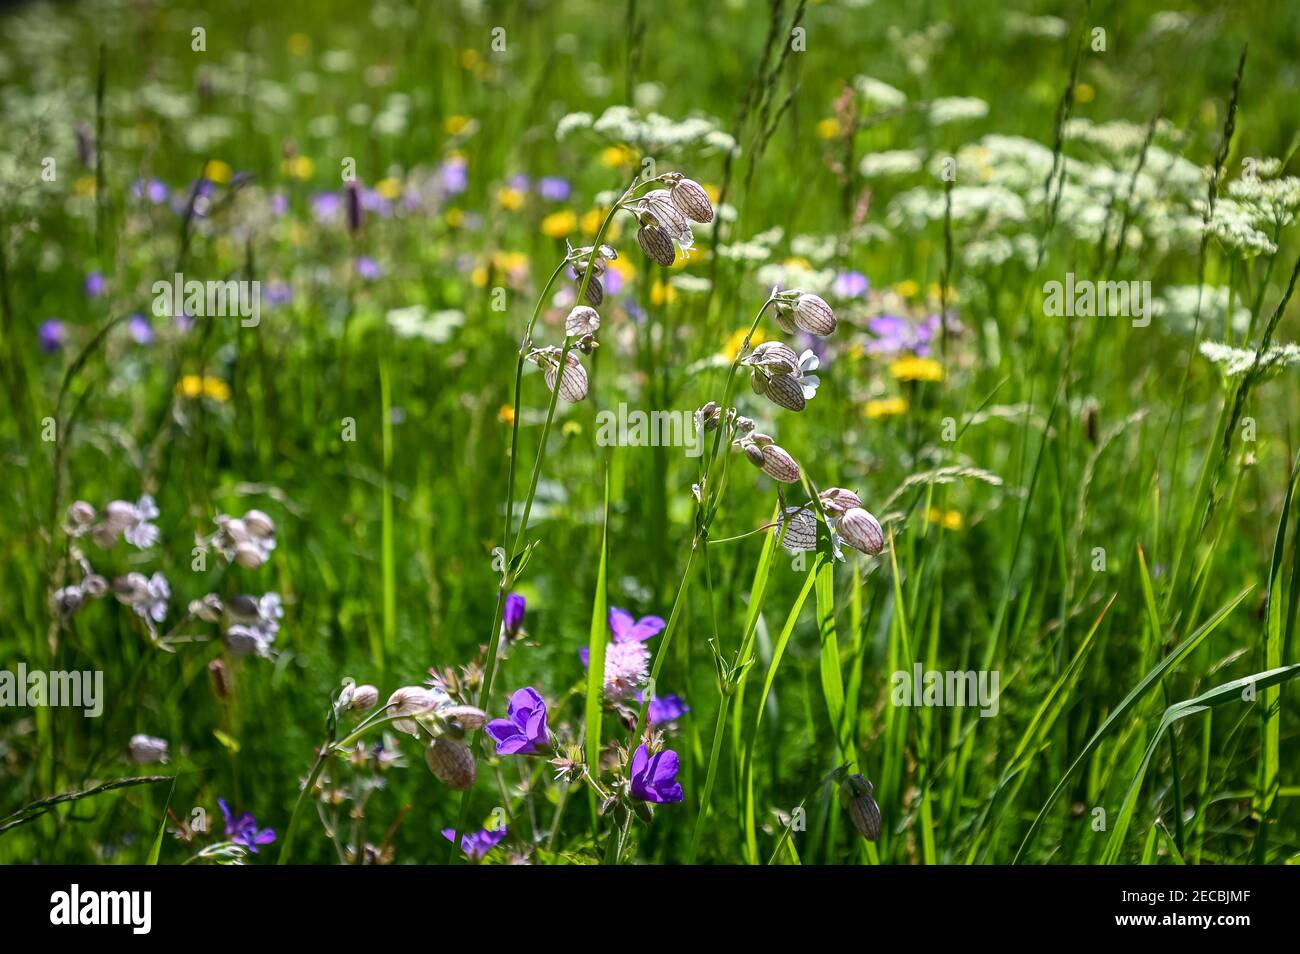 The flower Silene Vulgaris in a grass field close up Stock Photo